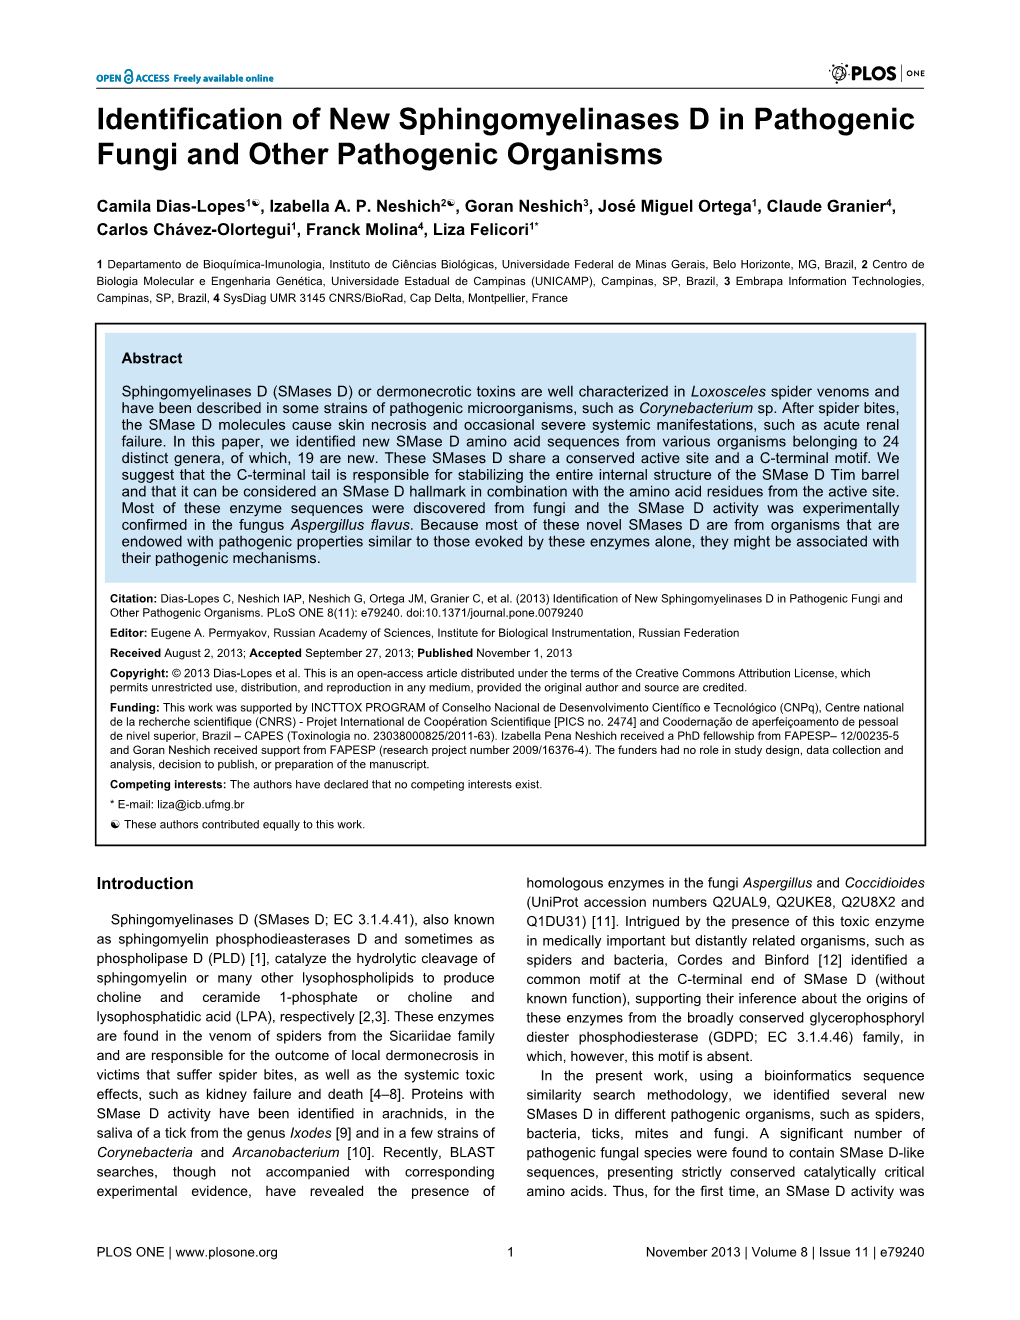 Identification of New Sphingomyelinases D in Pathogenic Fungi and Other Pathogenic Organisms